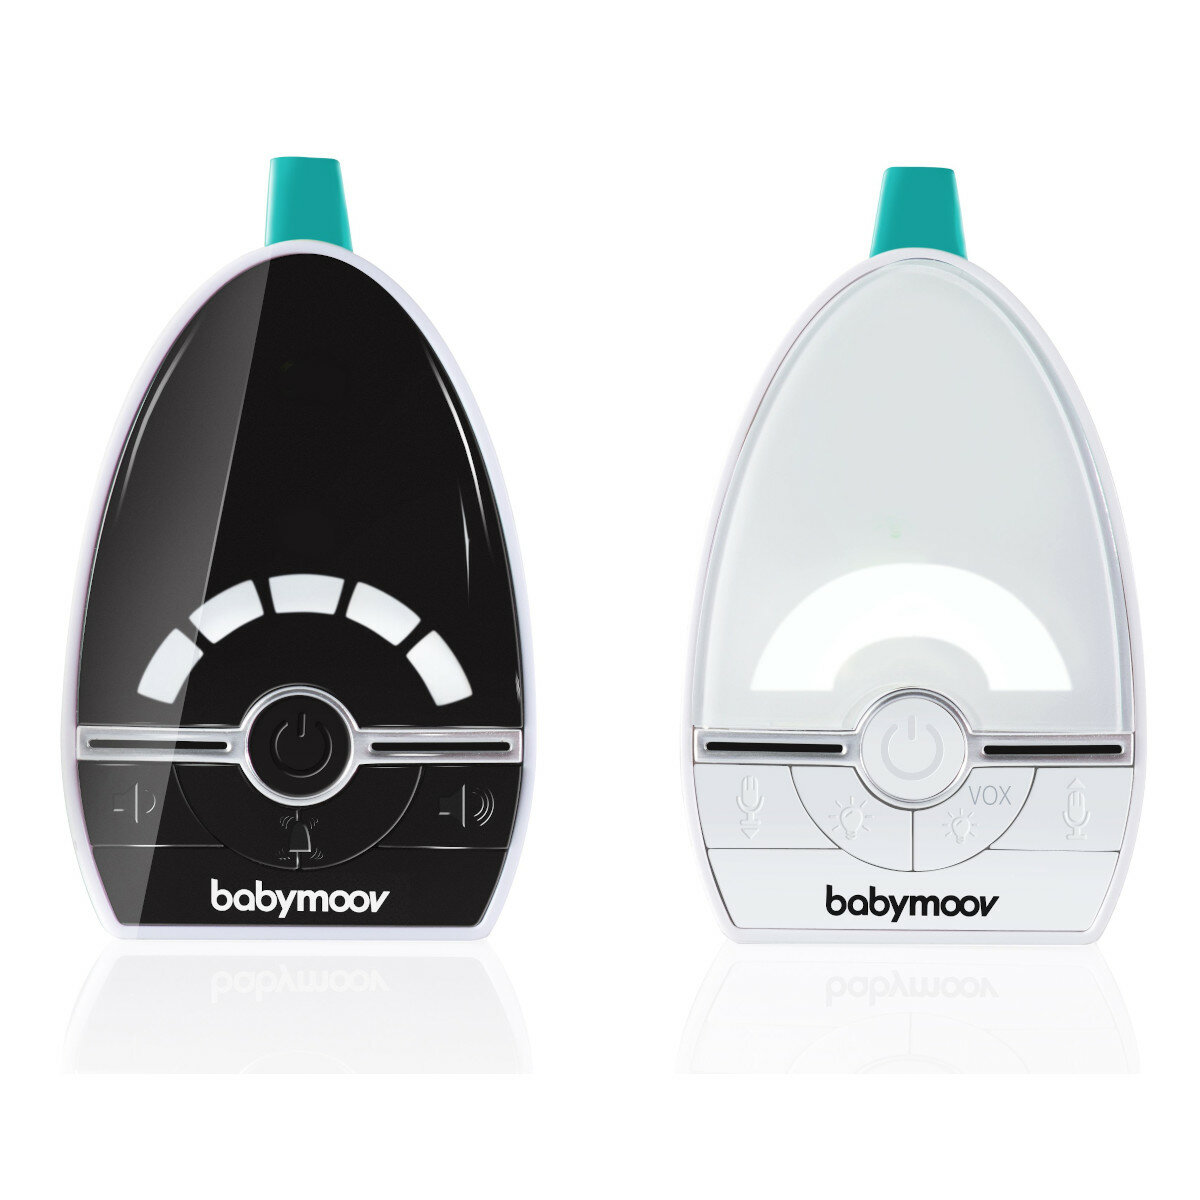 Babymoov Babyphone Expert Care 1000 m, 69,90 €